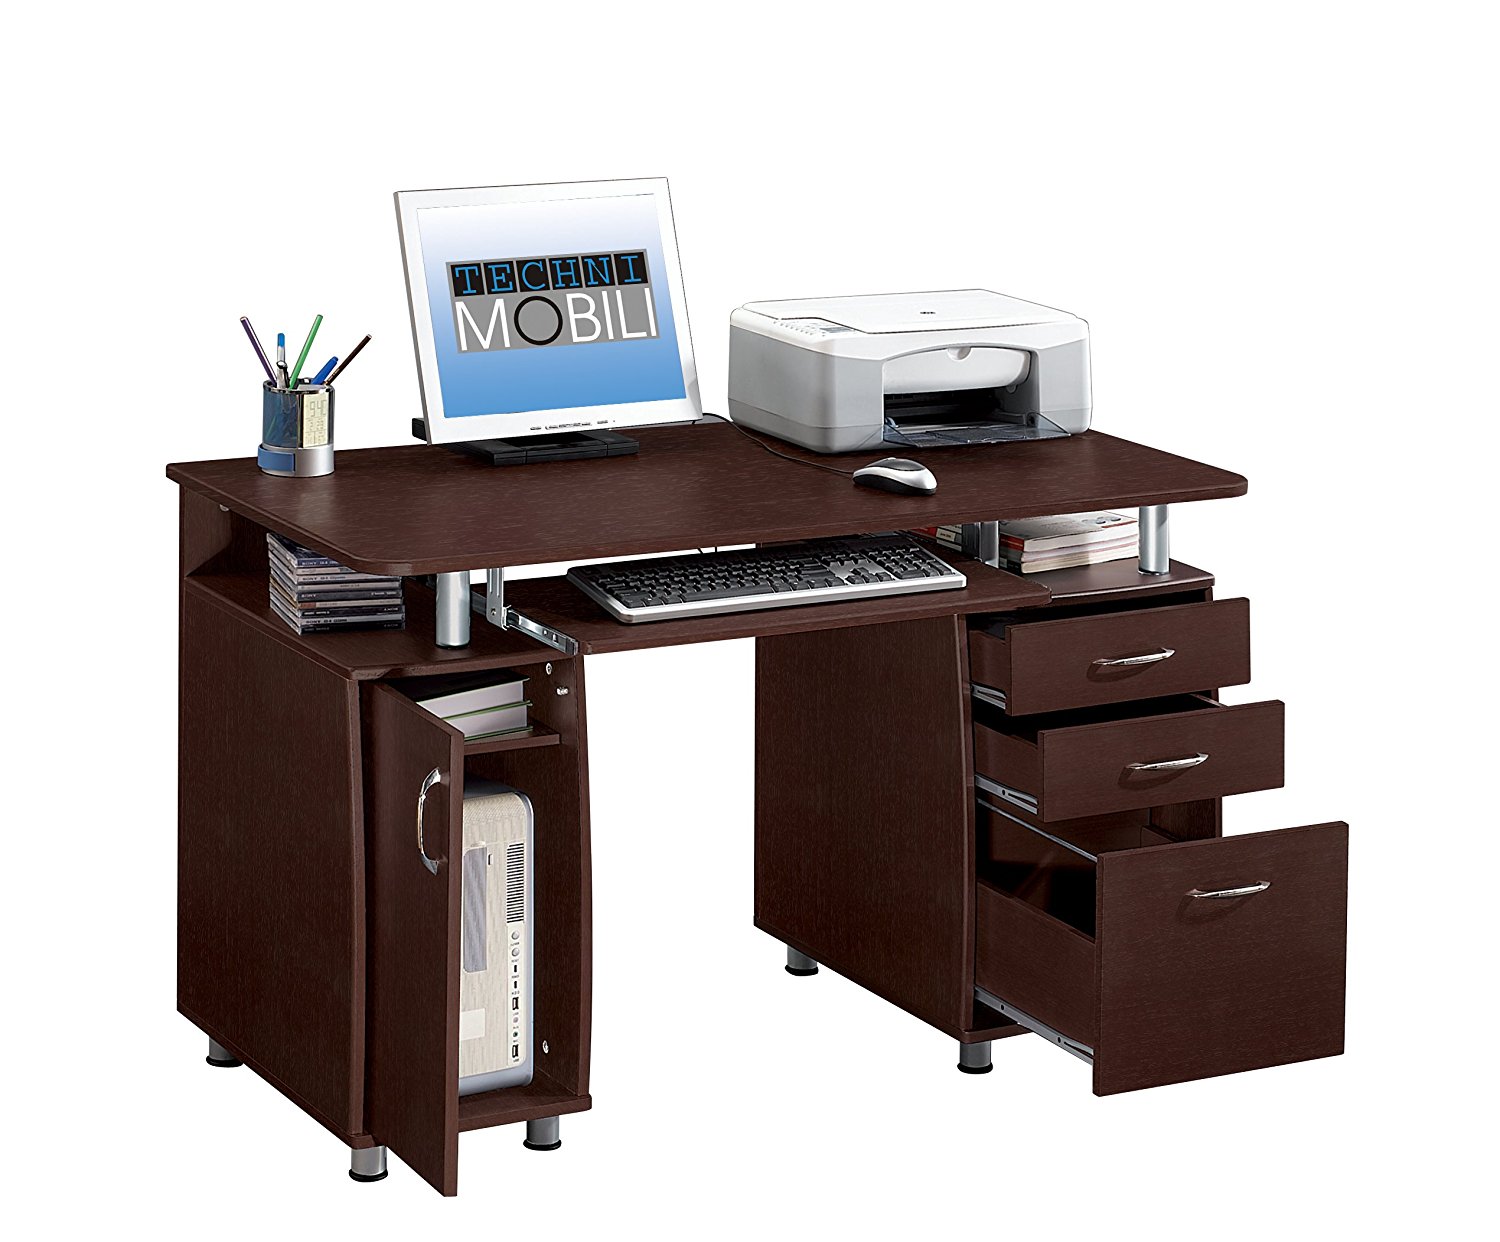 TECHNI MOBILI Complete Workstation Computer Desk with Storage - Chocolate